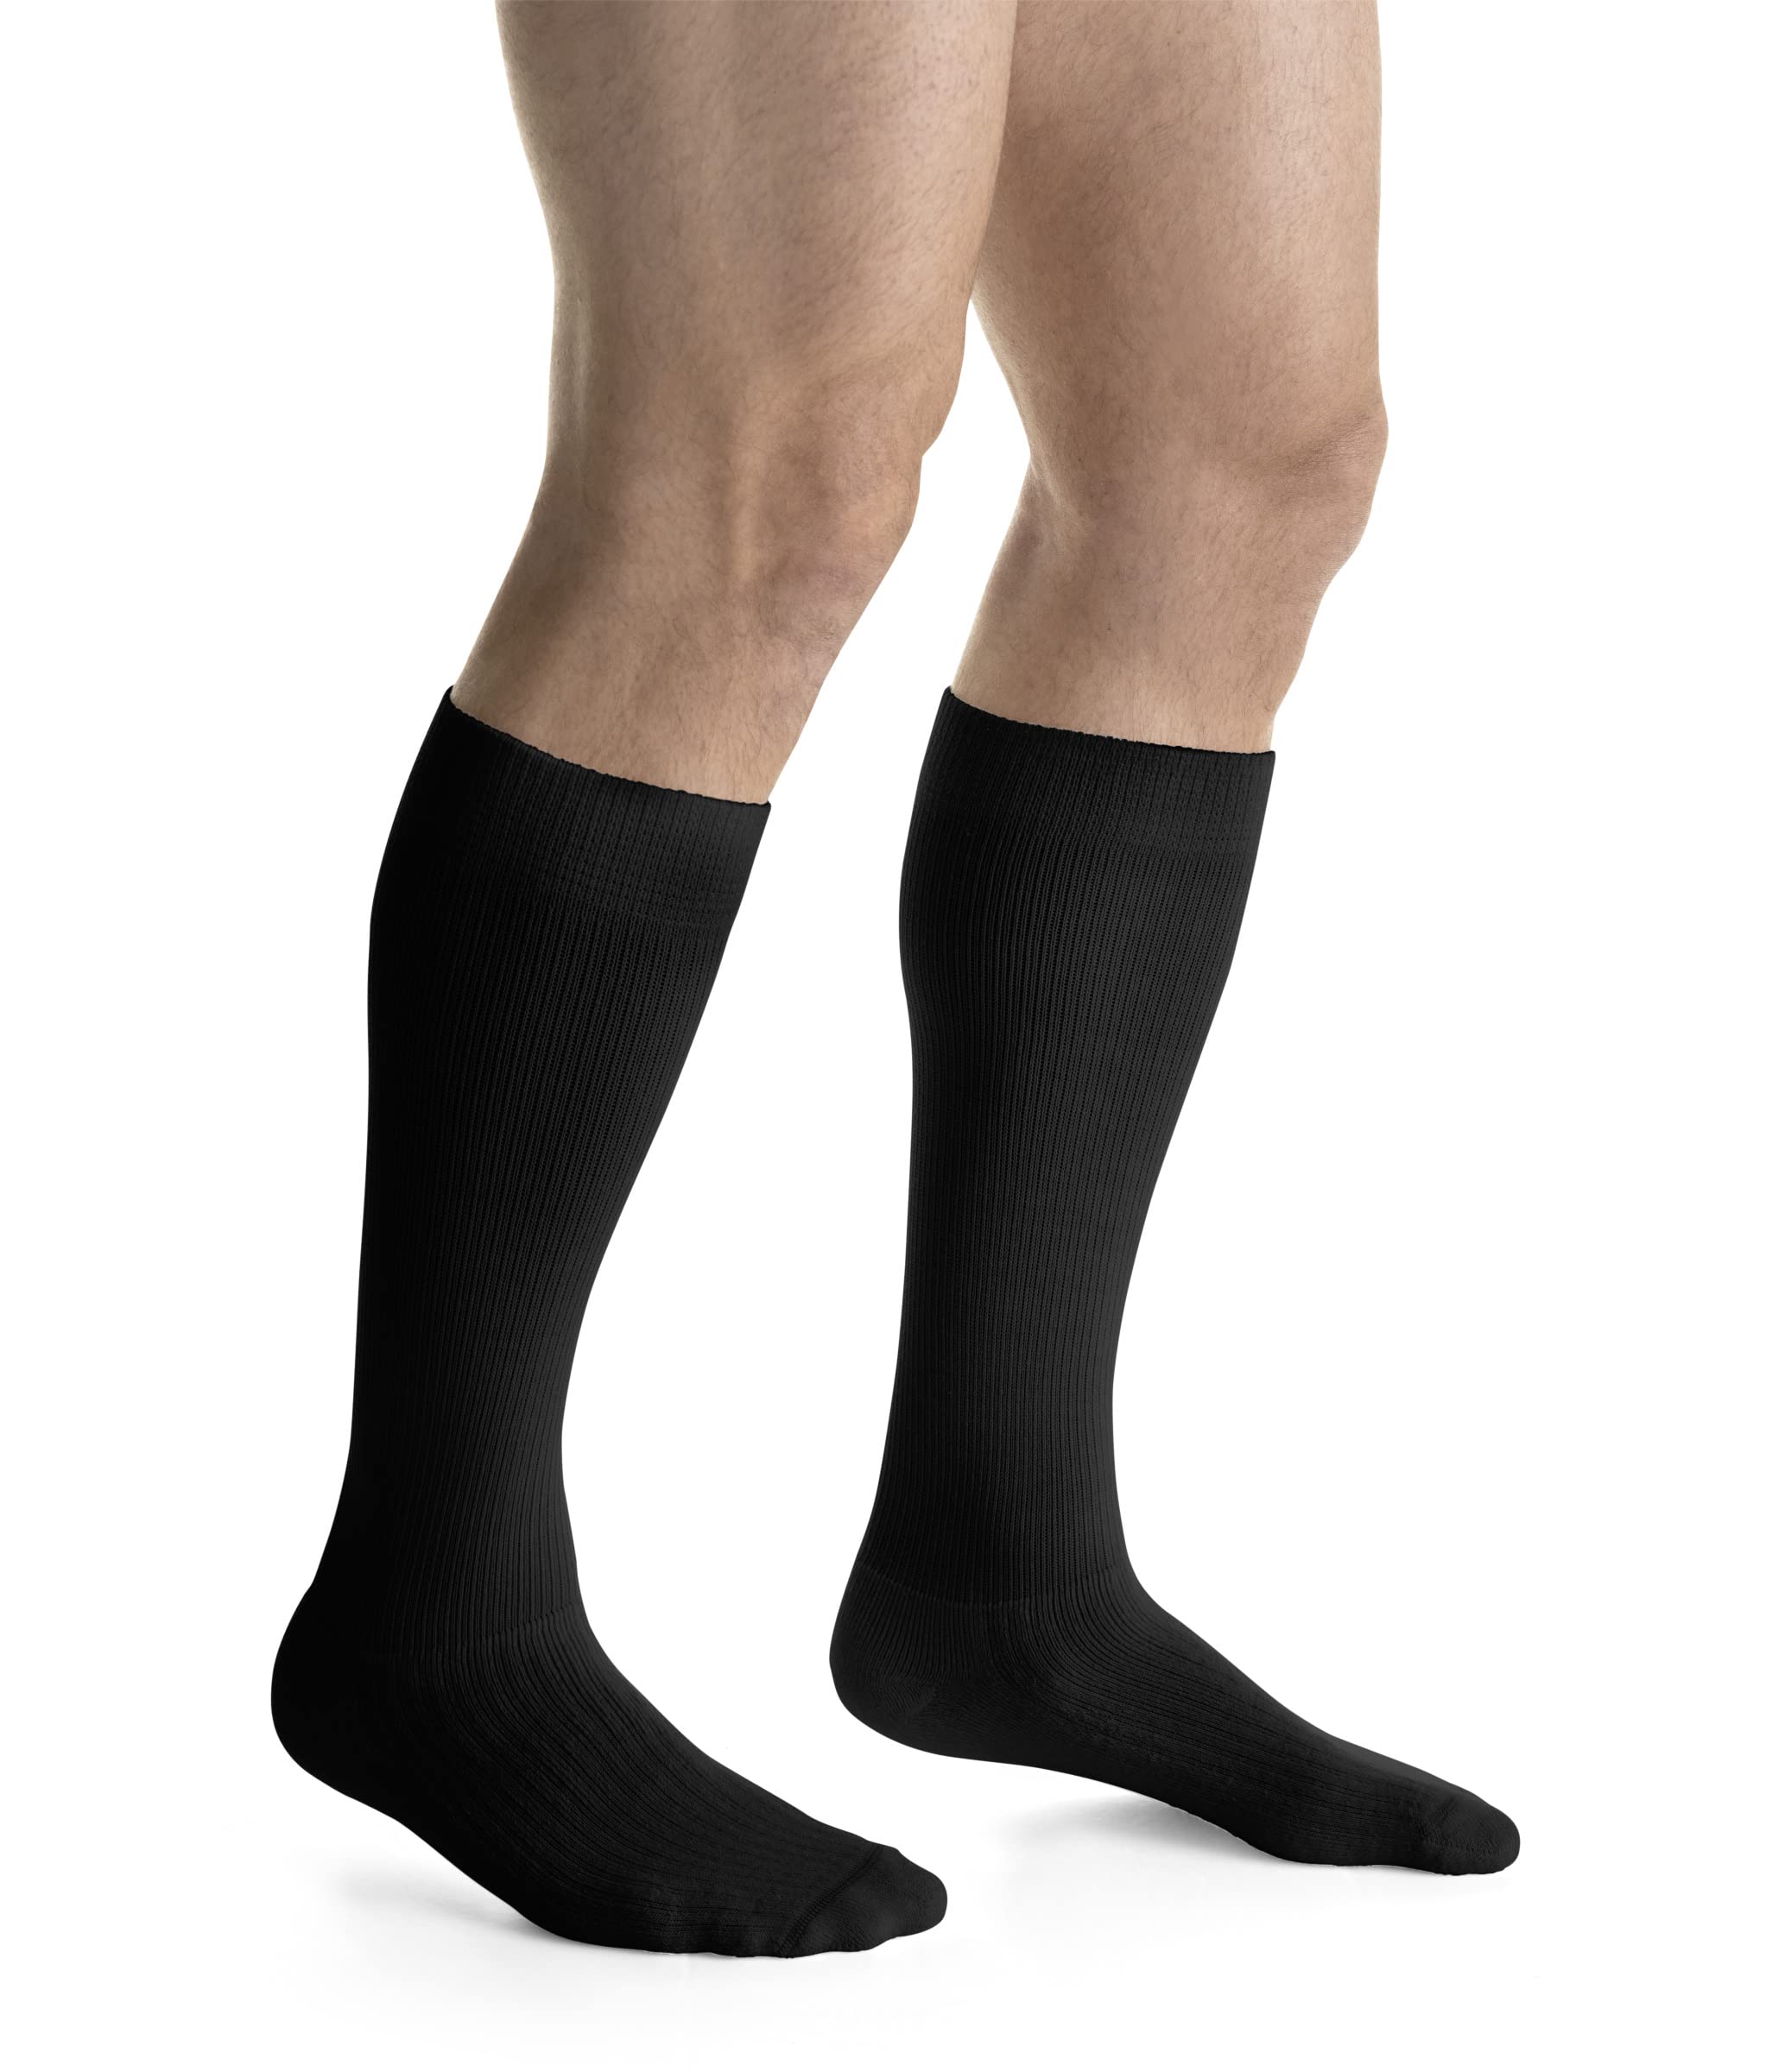 JOBST Activewear 20-30 mmHg Knee High Compression Socks, Medium, Cool Black